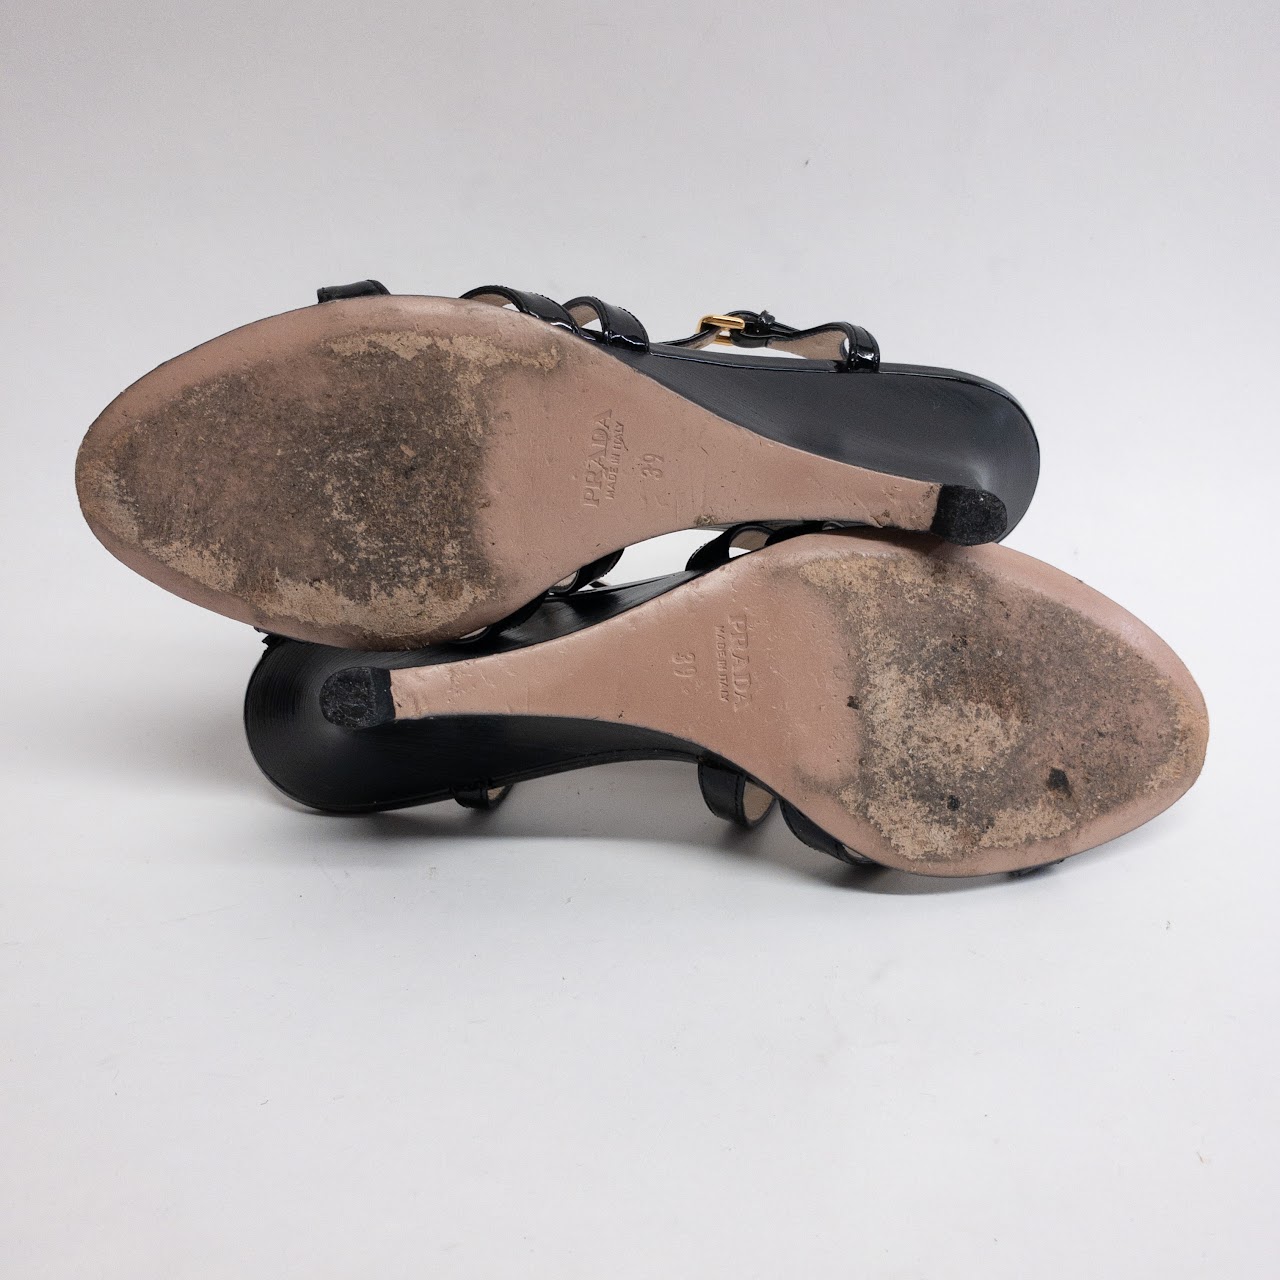 Prada Patent Leather Wedge Sandals